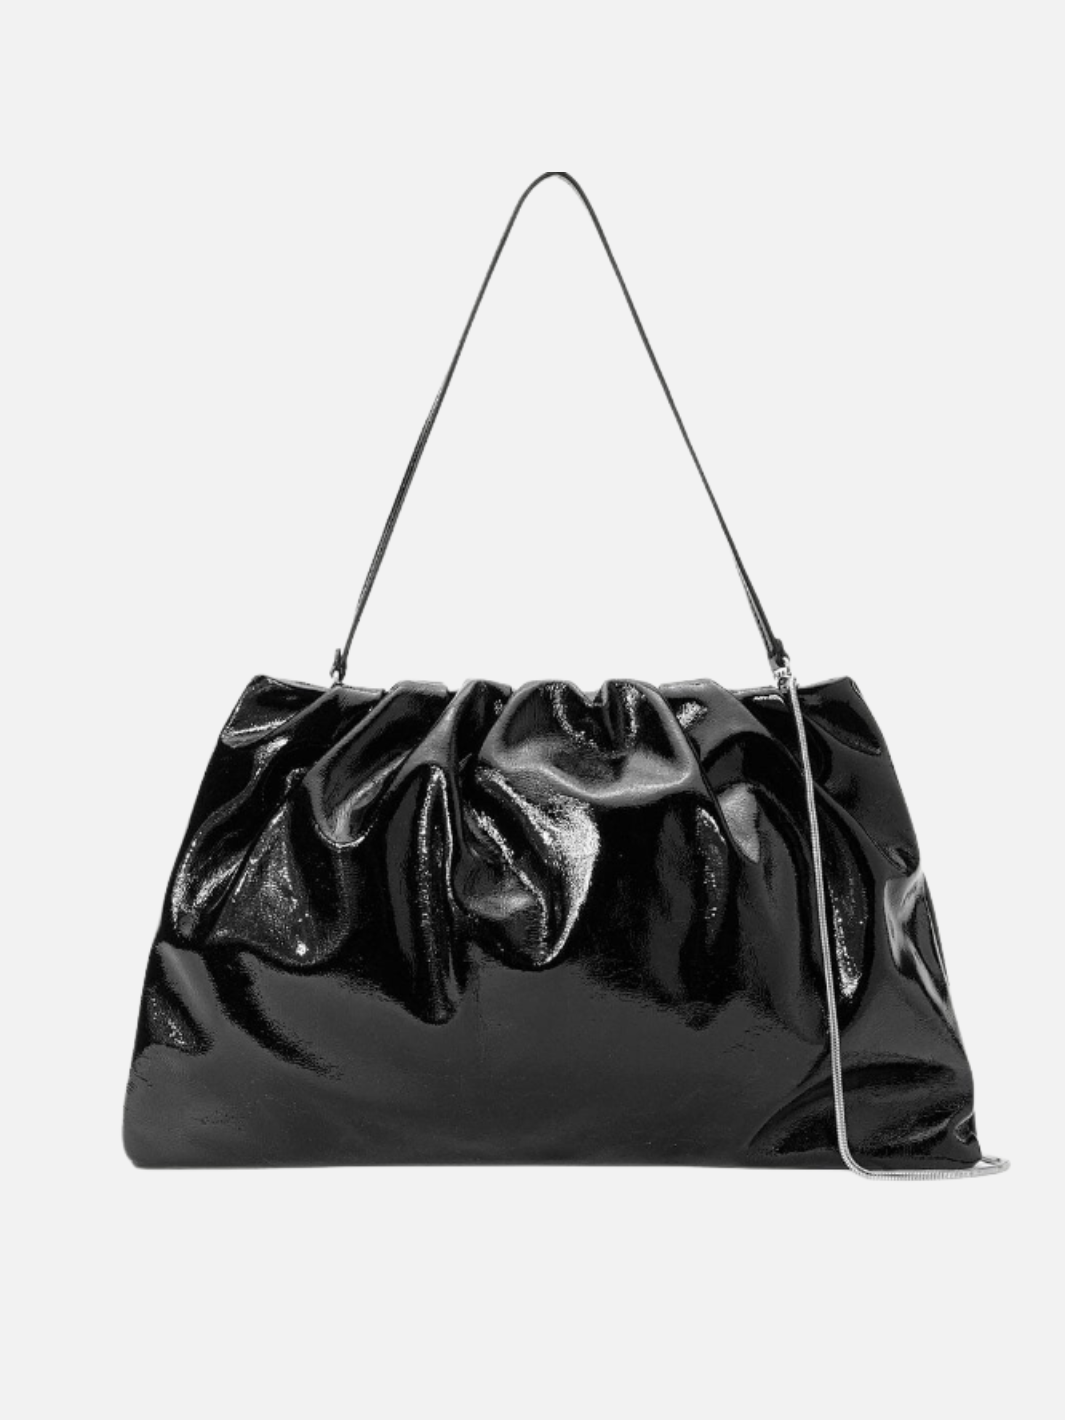 PHOEBE BAG IN BLACK - Romi Boutique